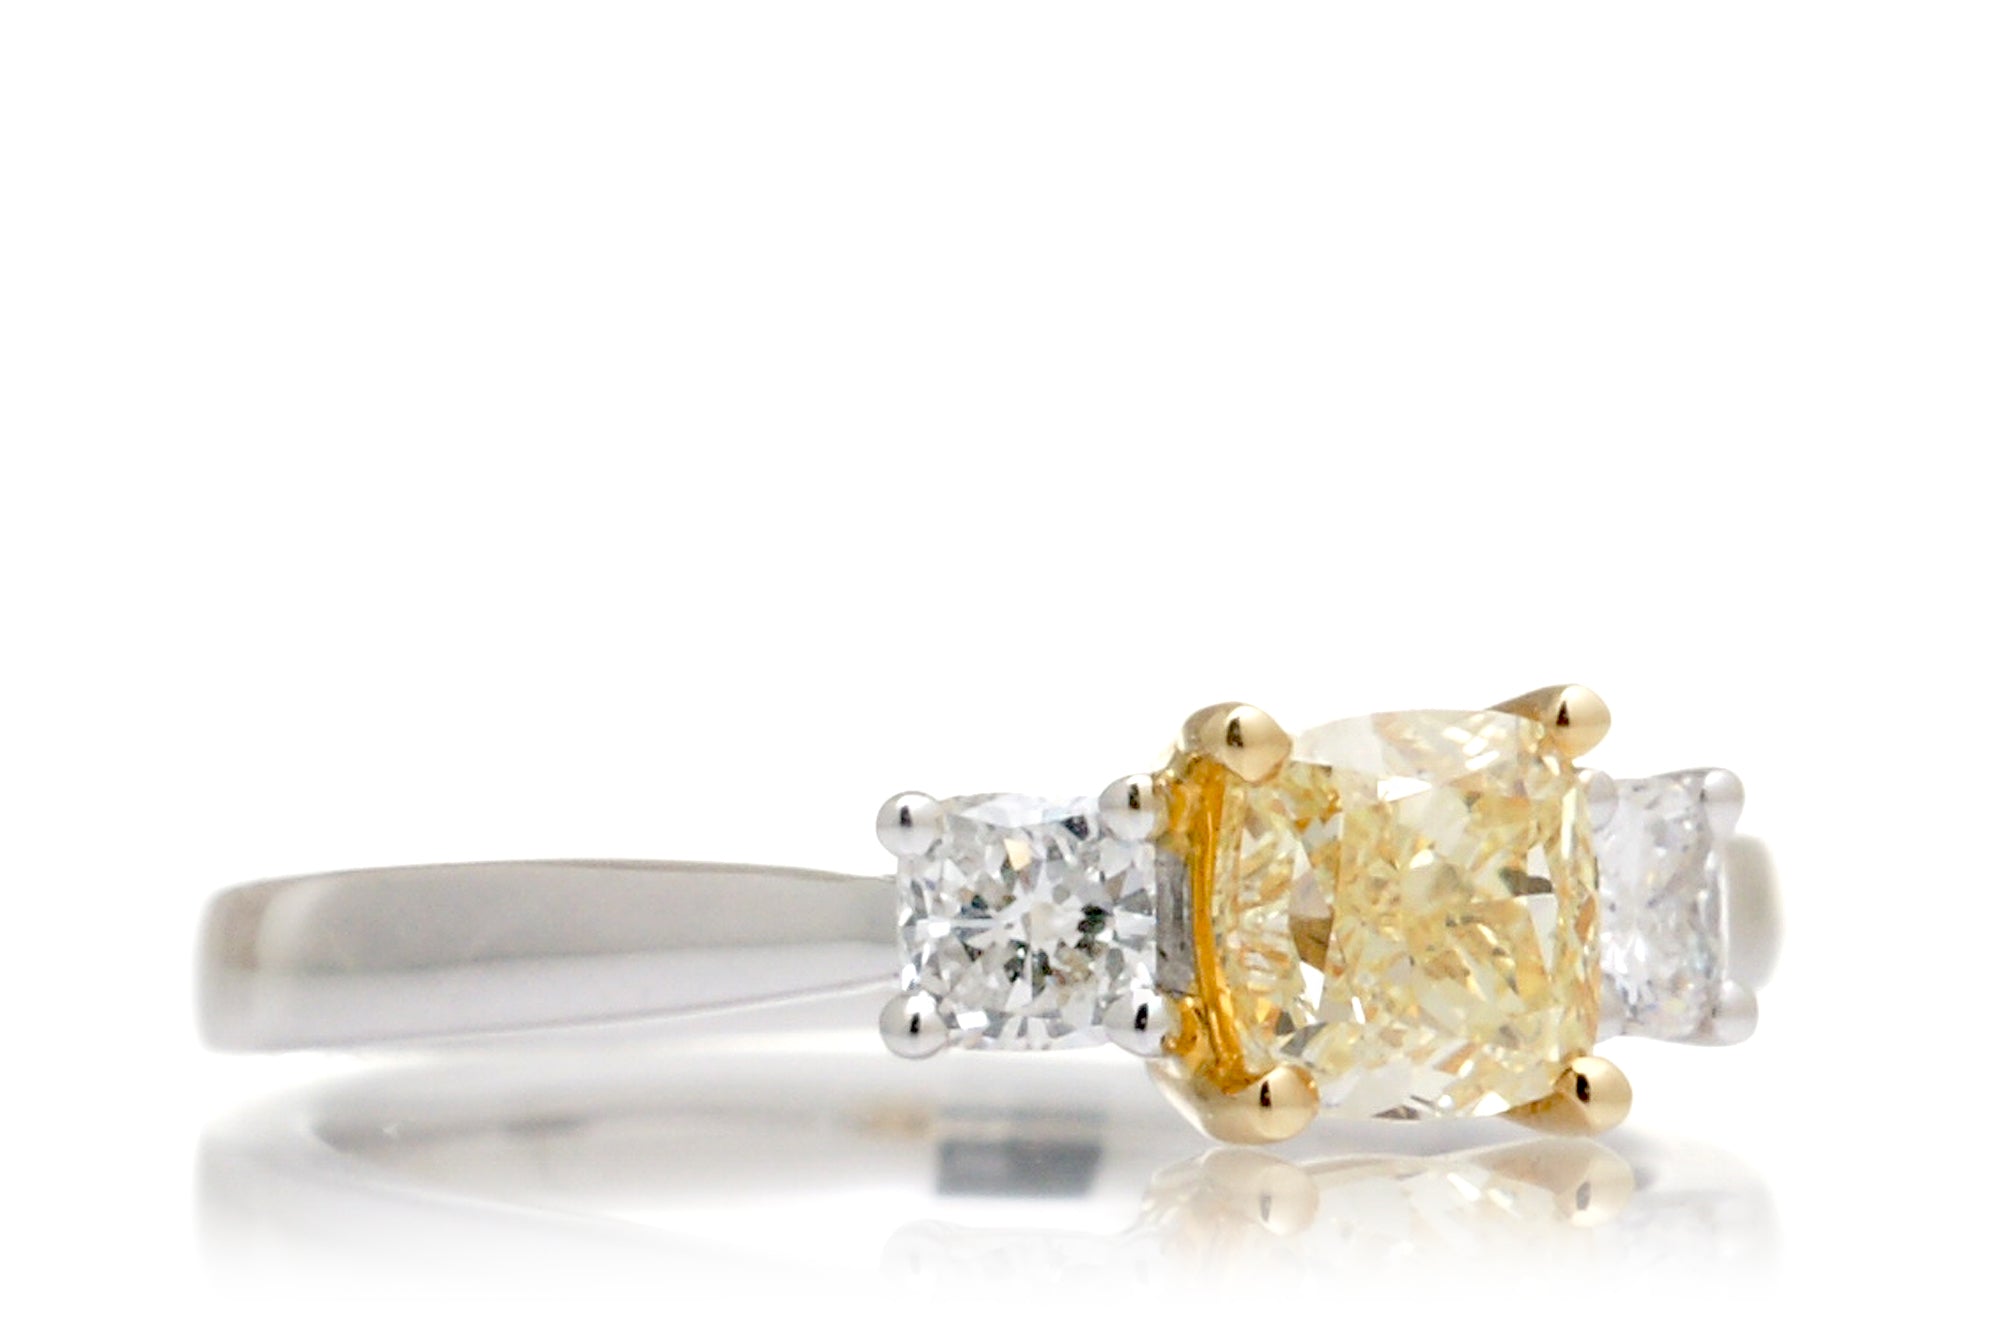 Natural Fancy Intense Yellow Diamond Ring, 8.06 Carats | M.S. Rau